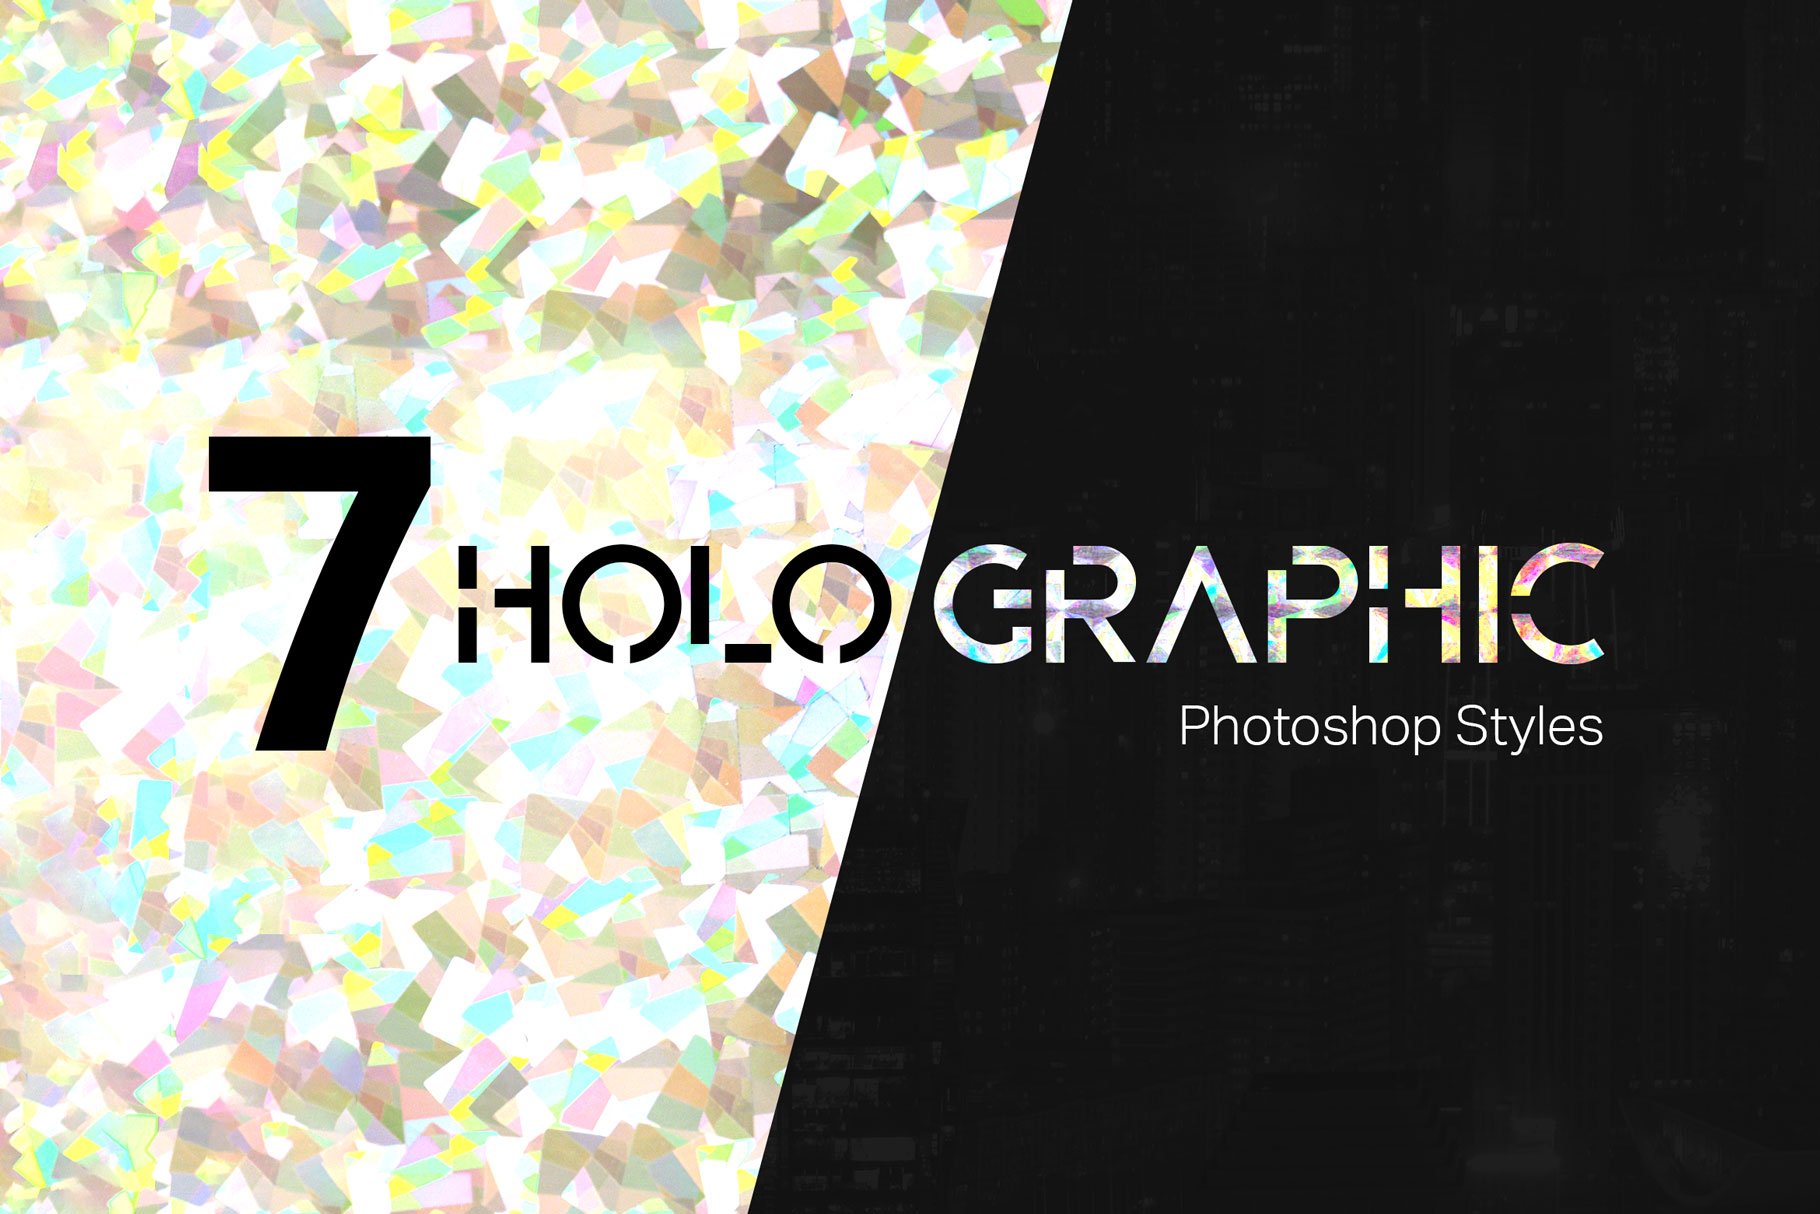 7 Holographic Photoshop Stylescover image.